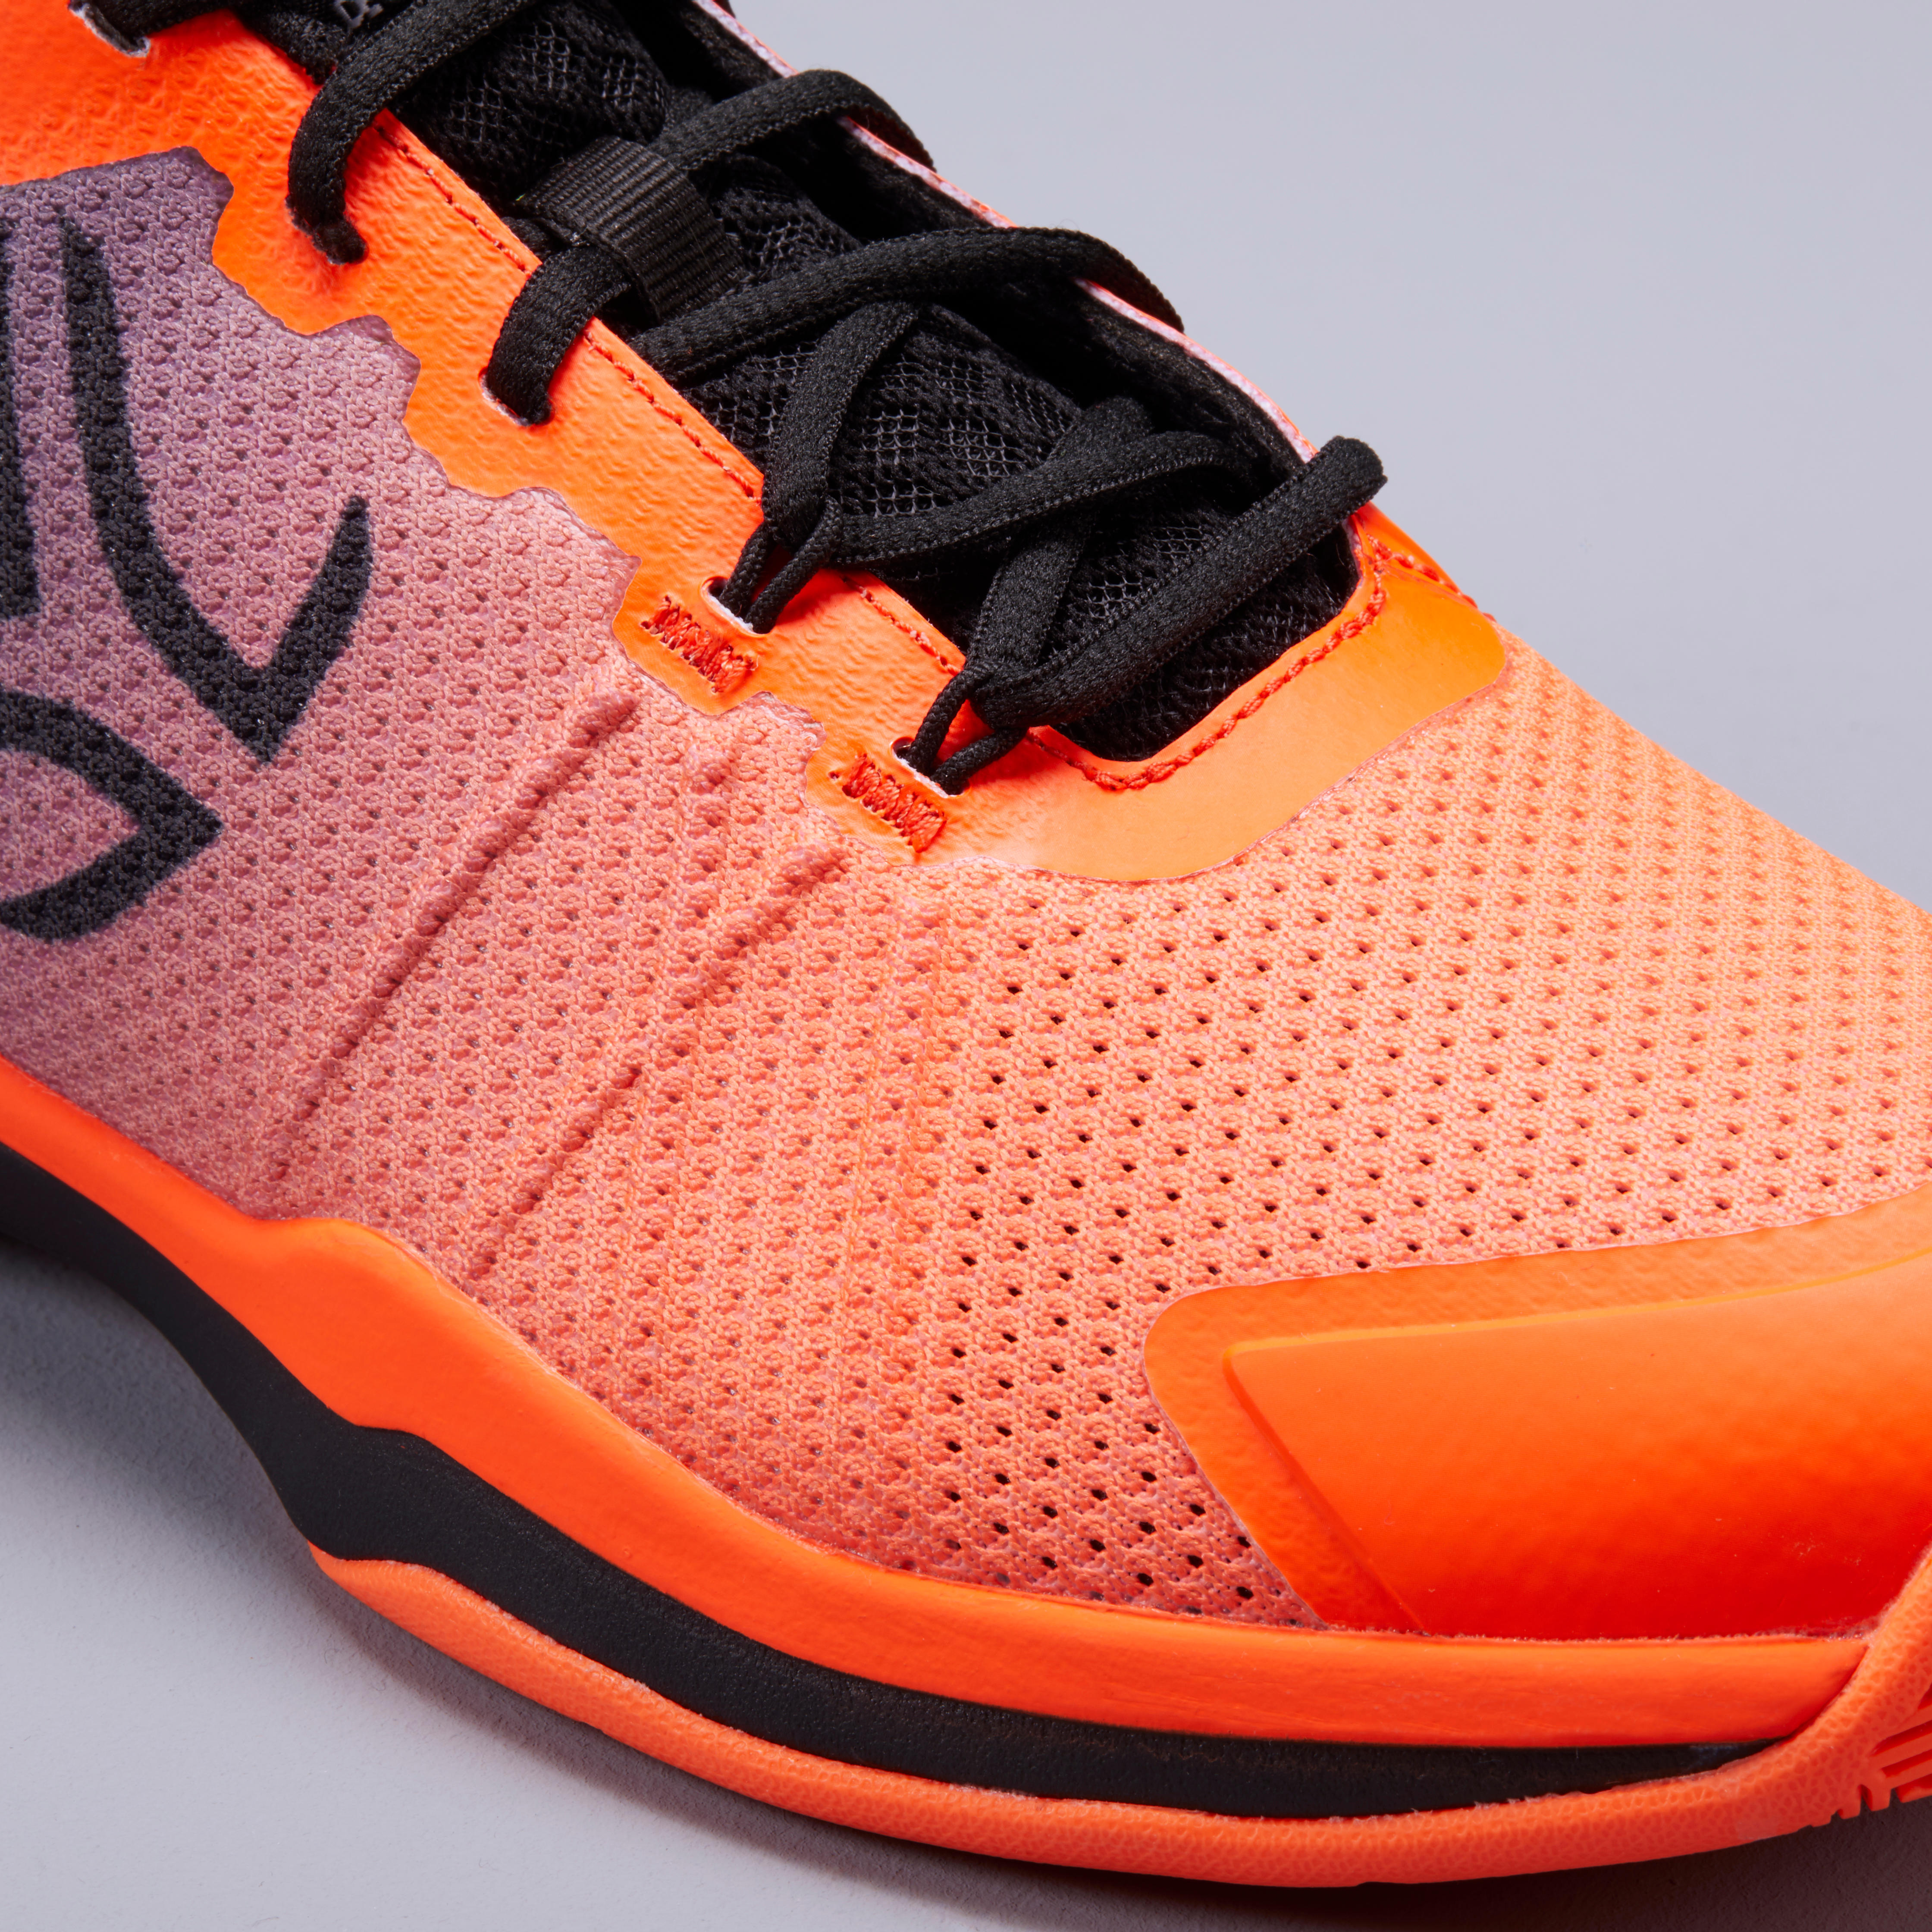 orange and black tennis shoes